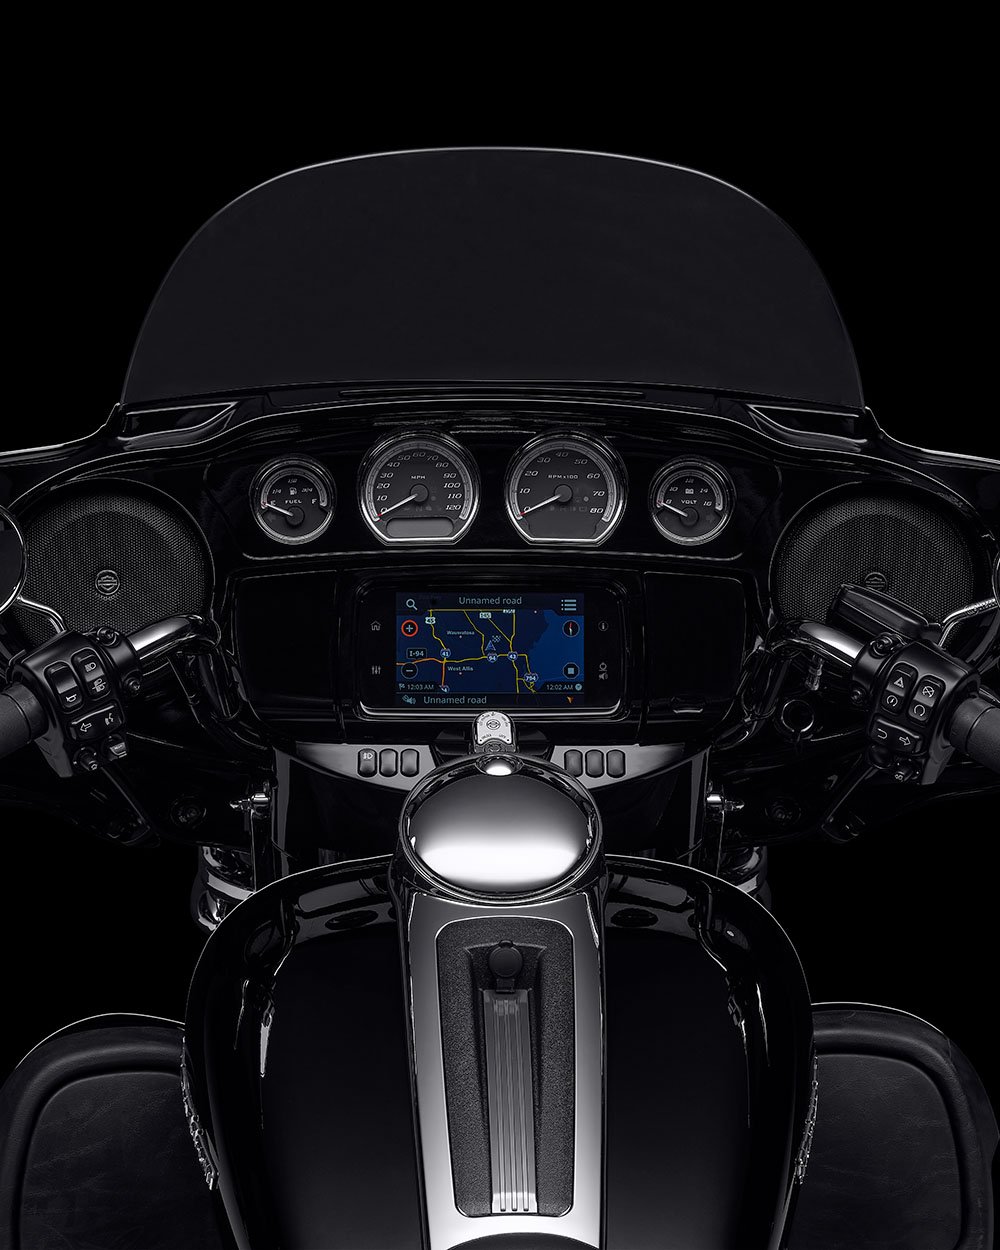 Sistema infotainment Boom Box GTS em uma motocicleta Ultra Limited